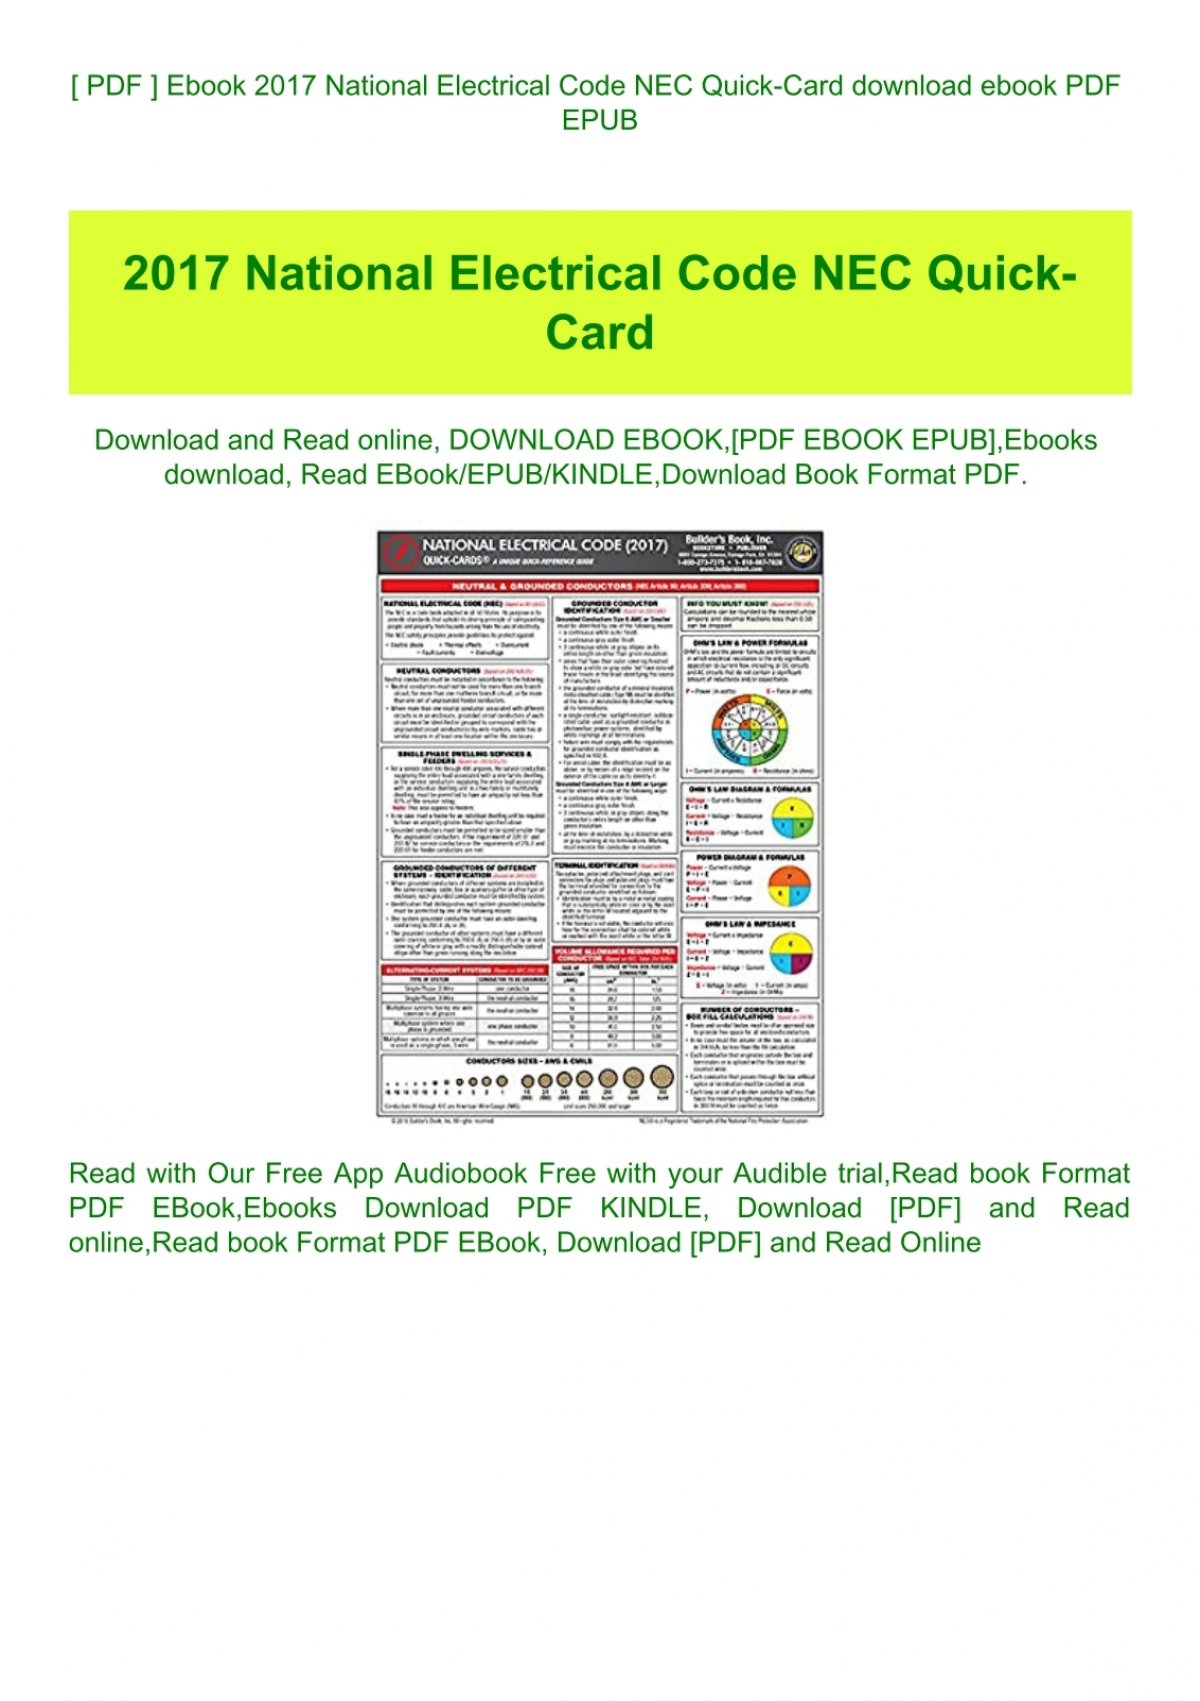 Nec code pdf free download